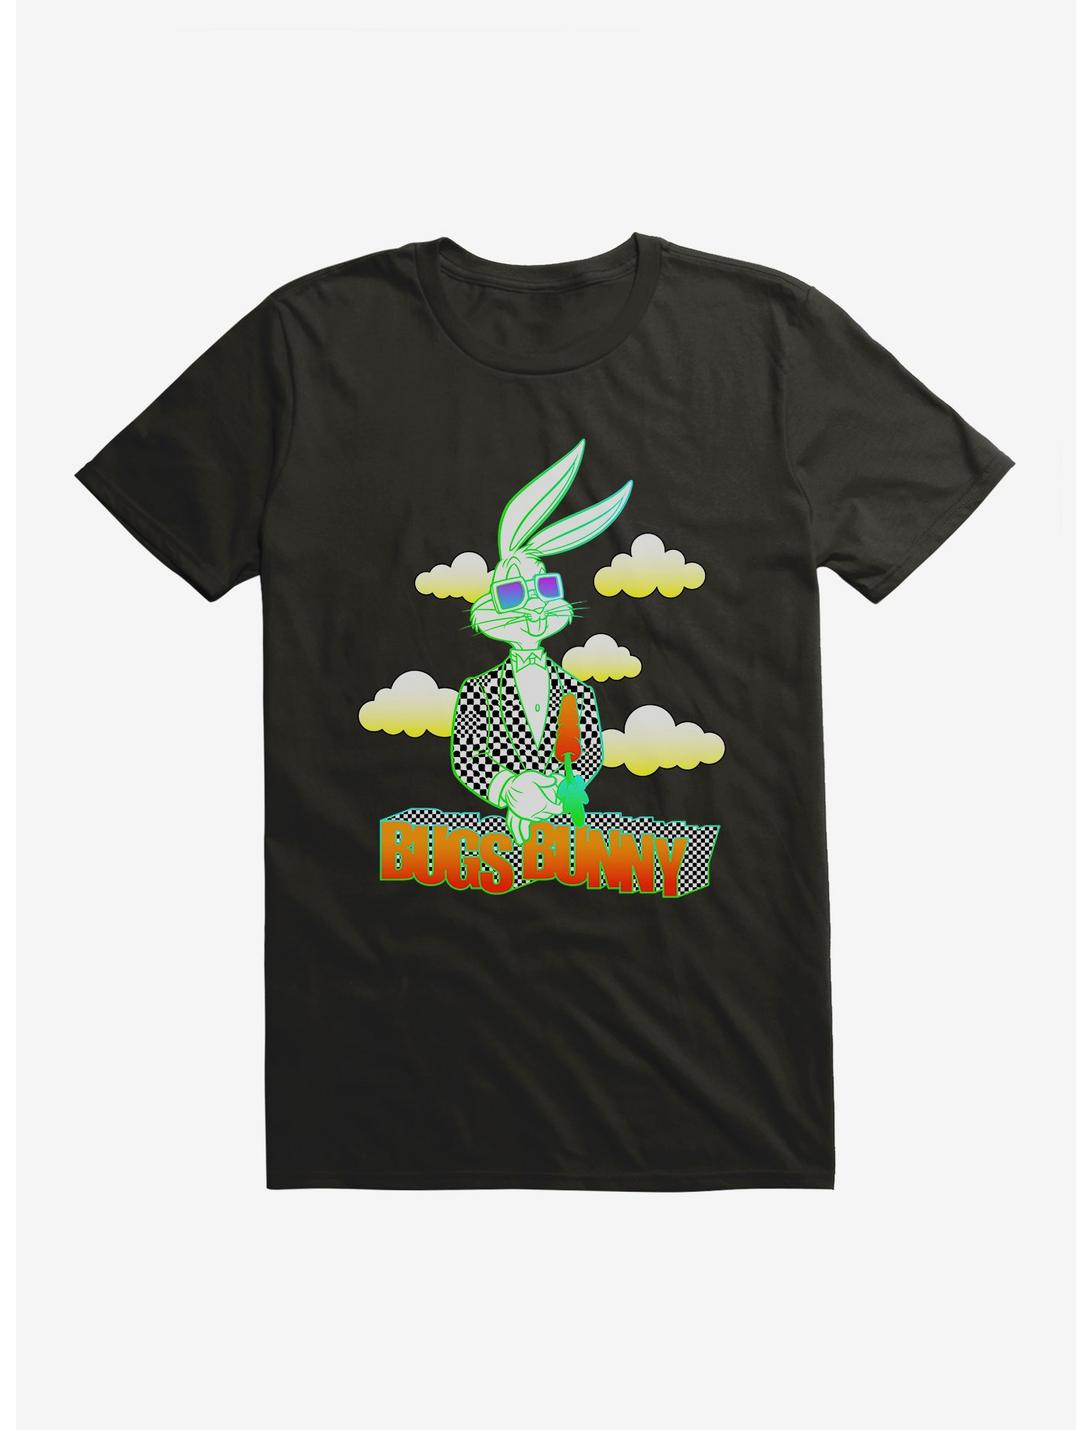 Looney Tunes Cool Bugs Bunny T-Shirt, , hi-res